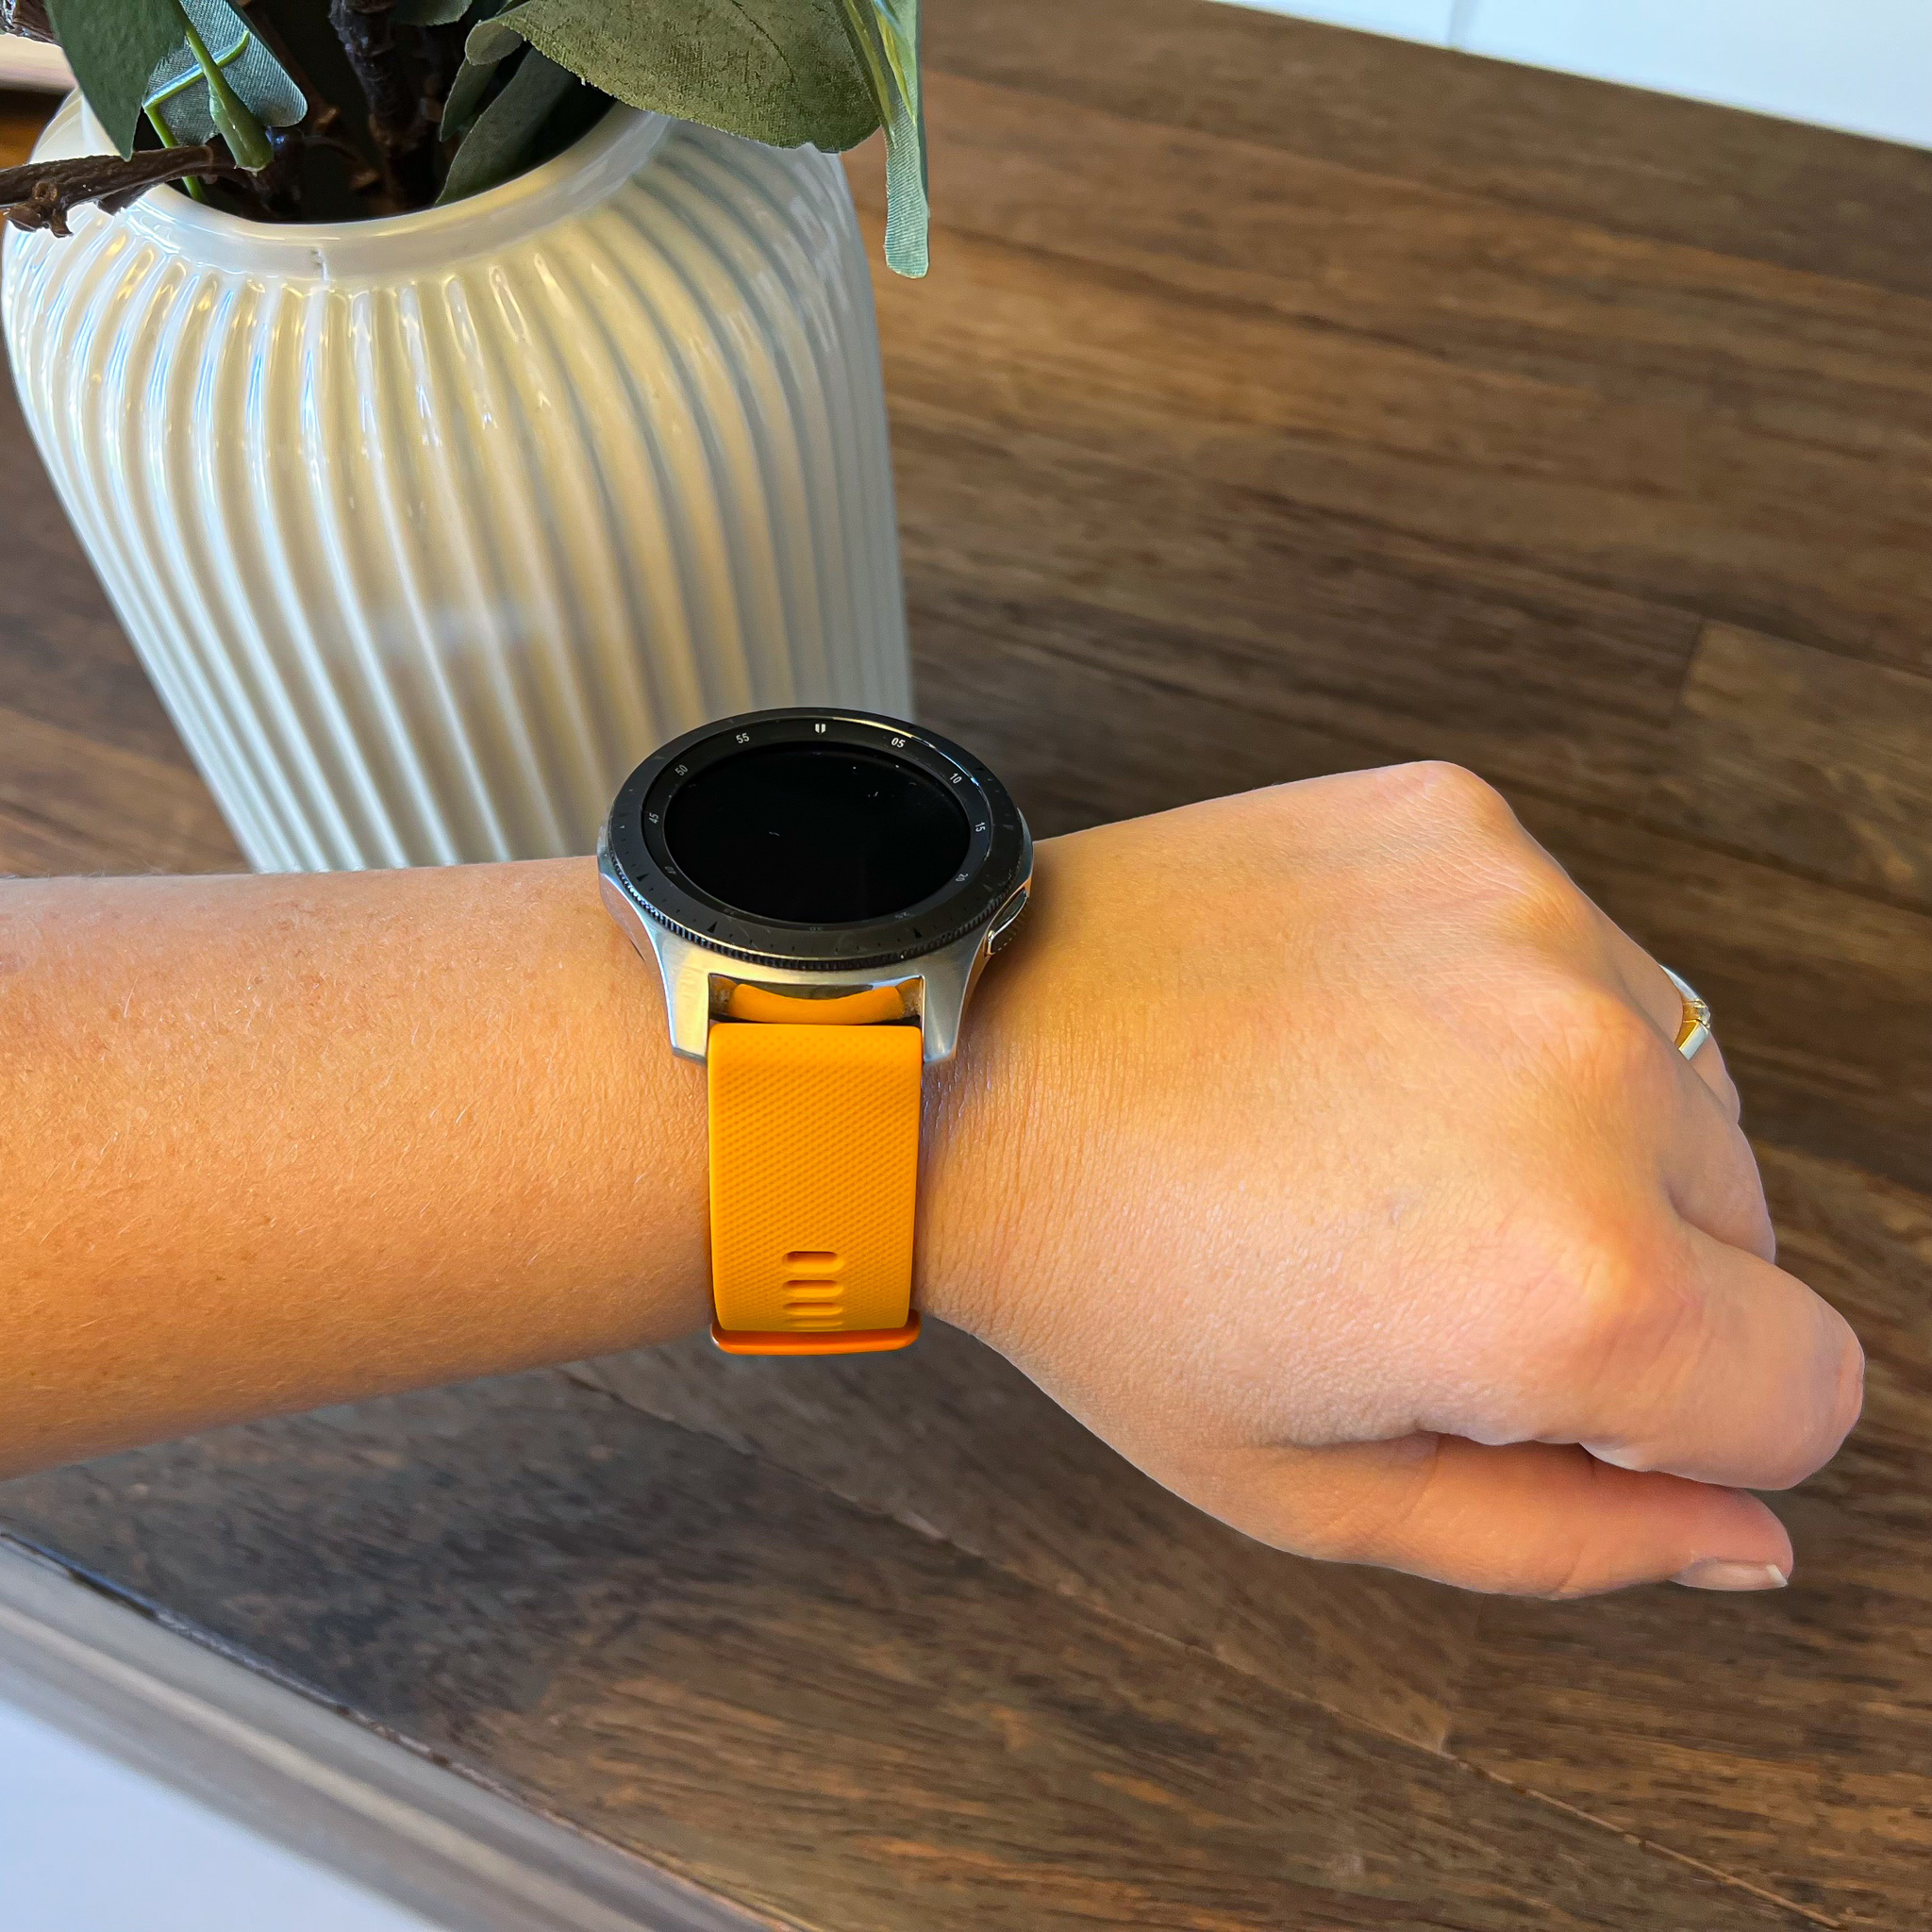 Samsung Galaxy Watch sport gesp band - oranje